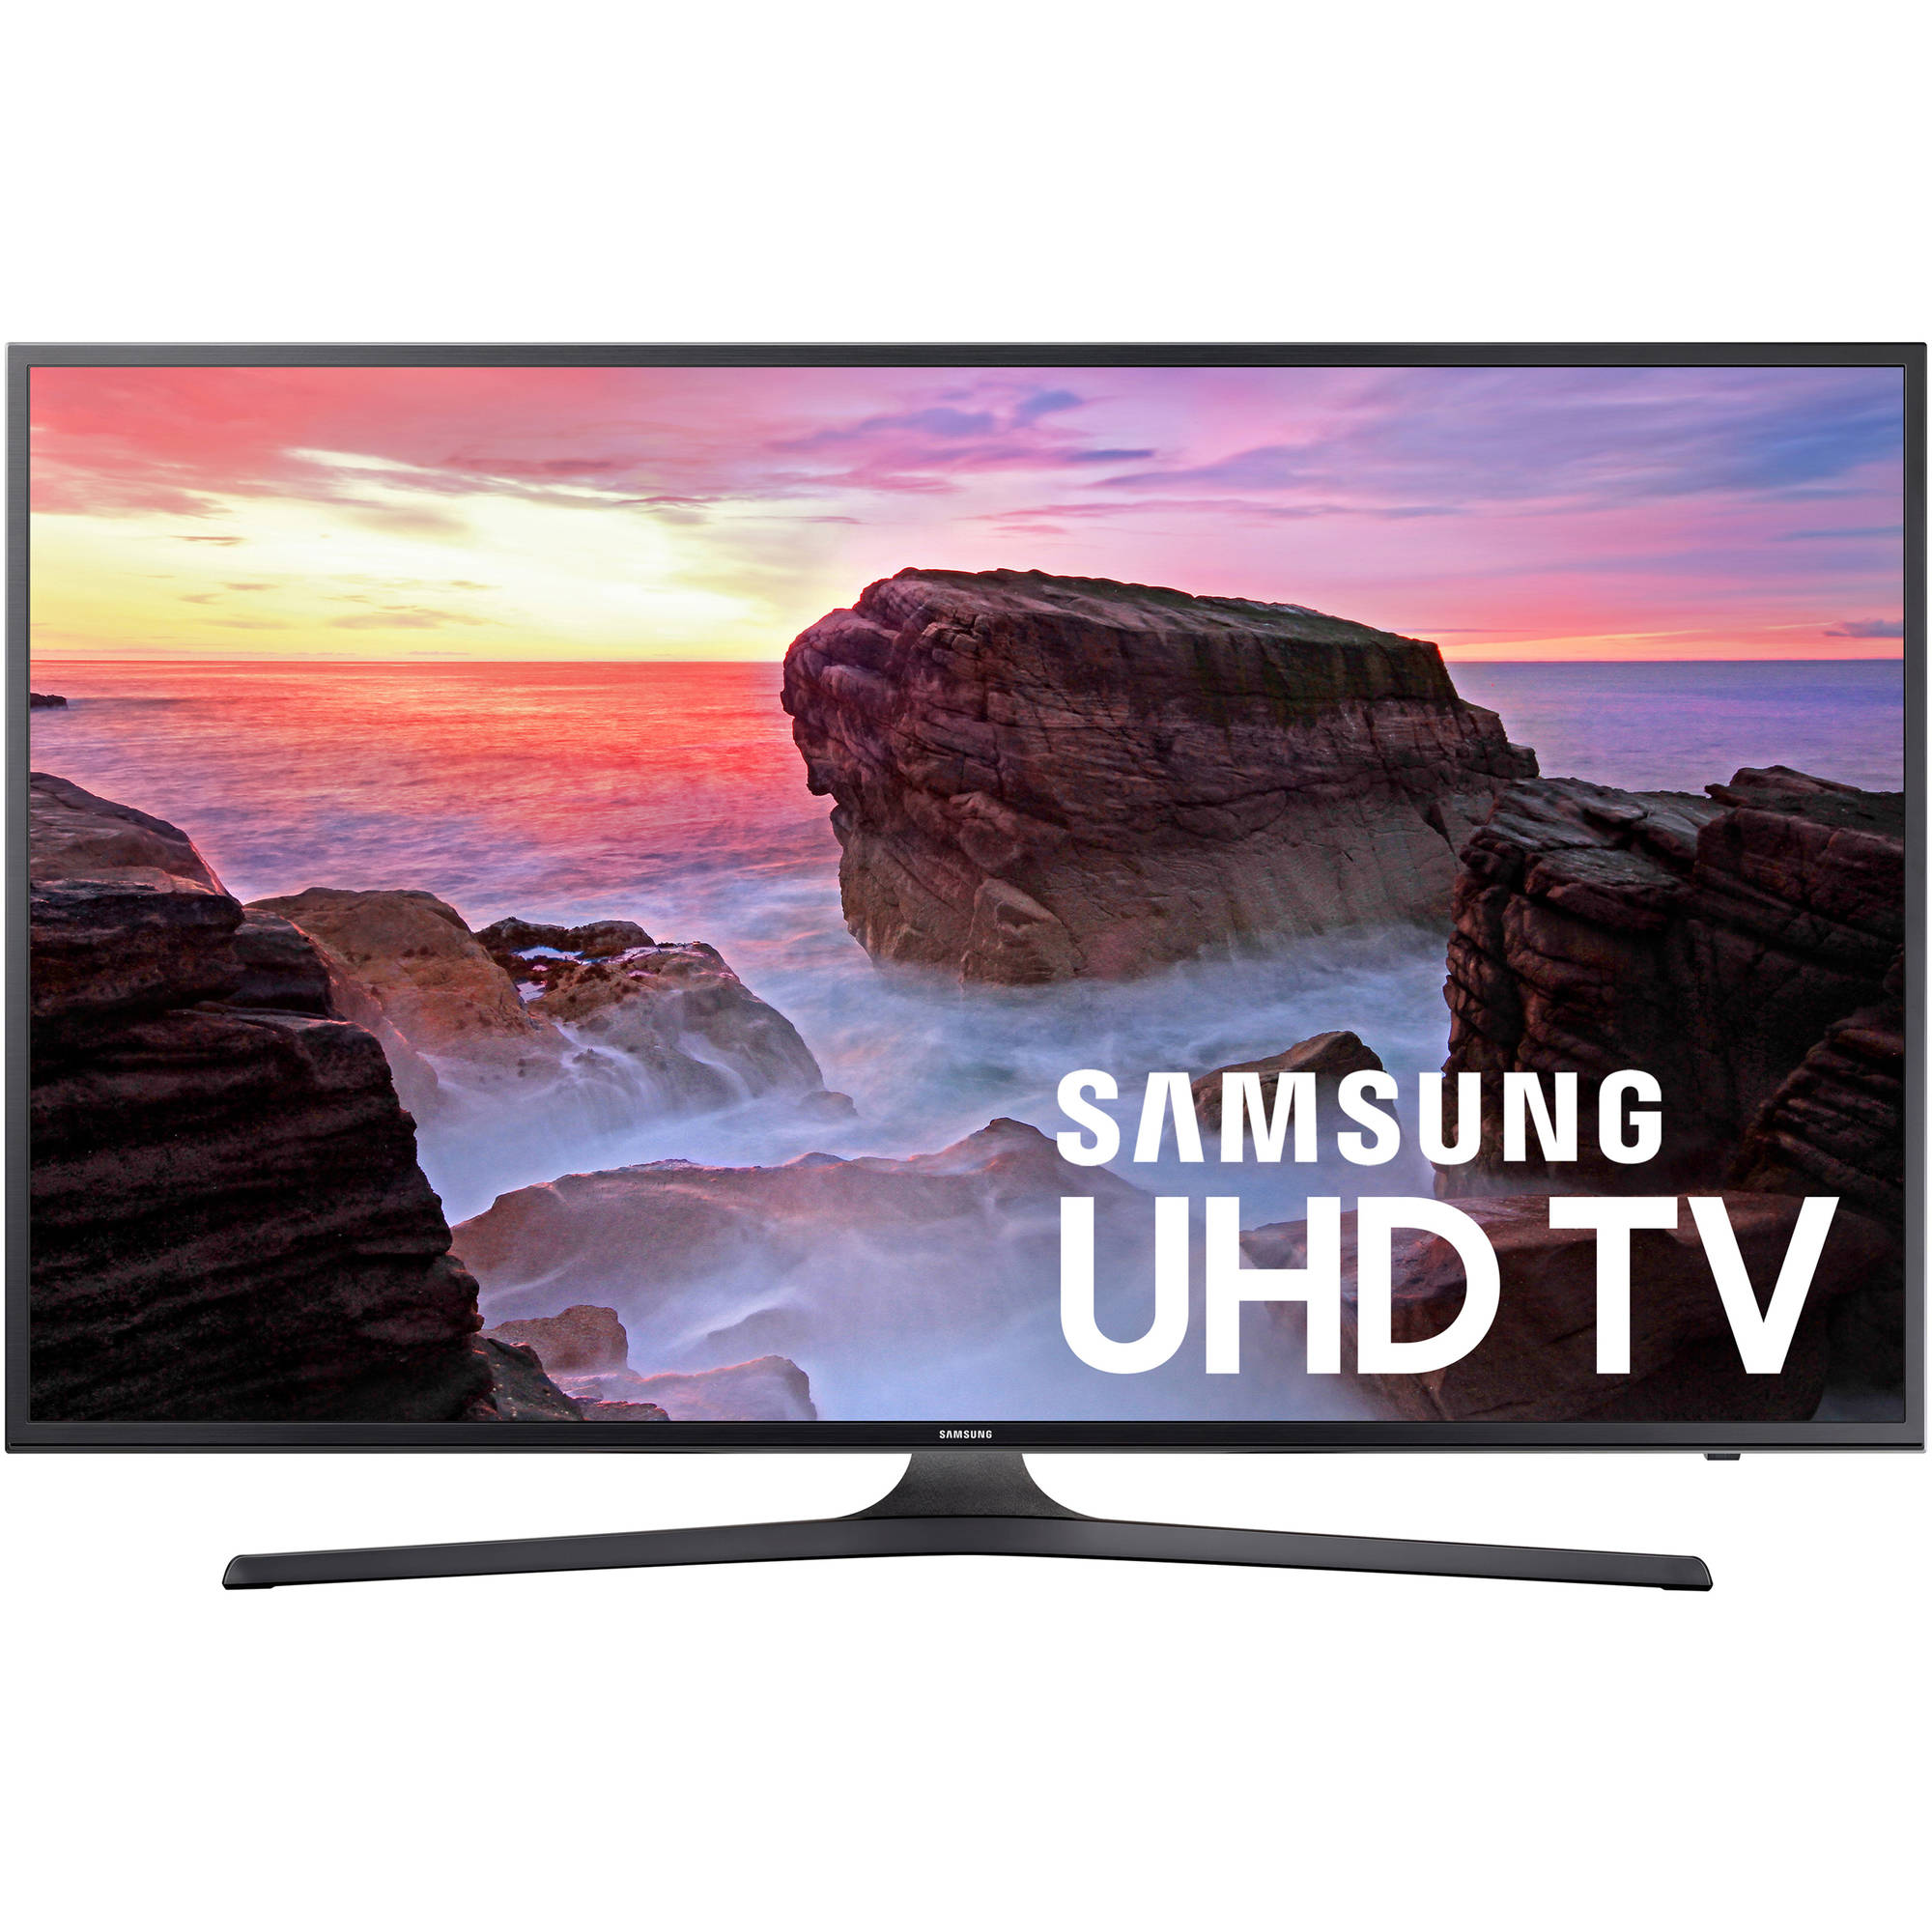 Samsung 43" Class 4K (2160P) Smart LED TV (UN43MU6300) - image 1 of 8